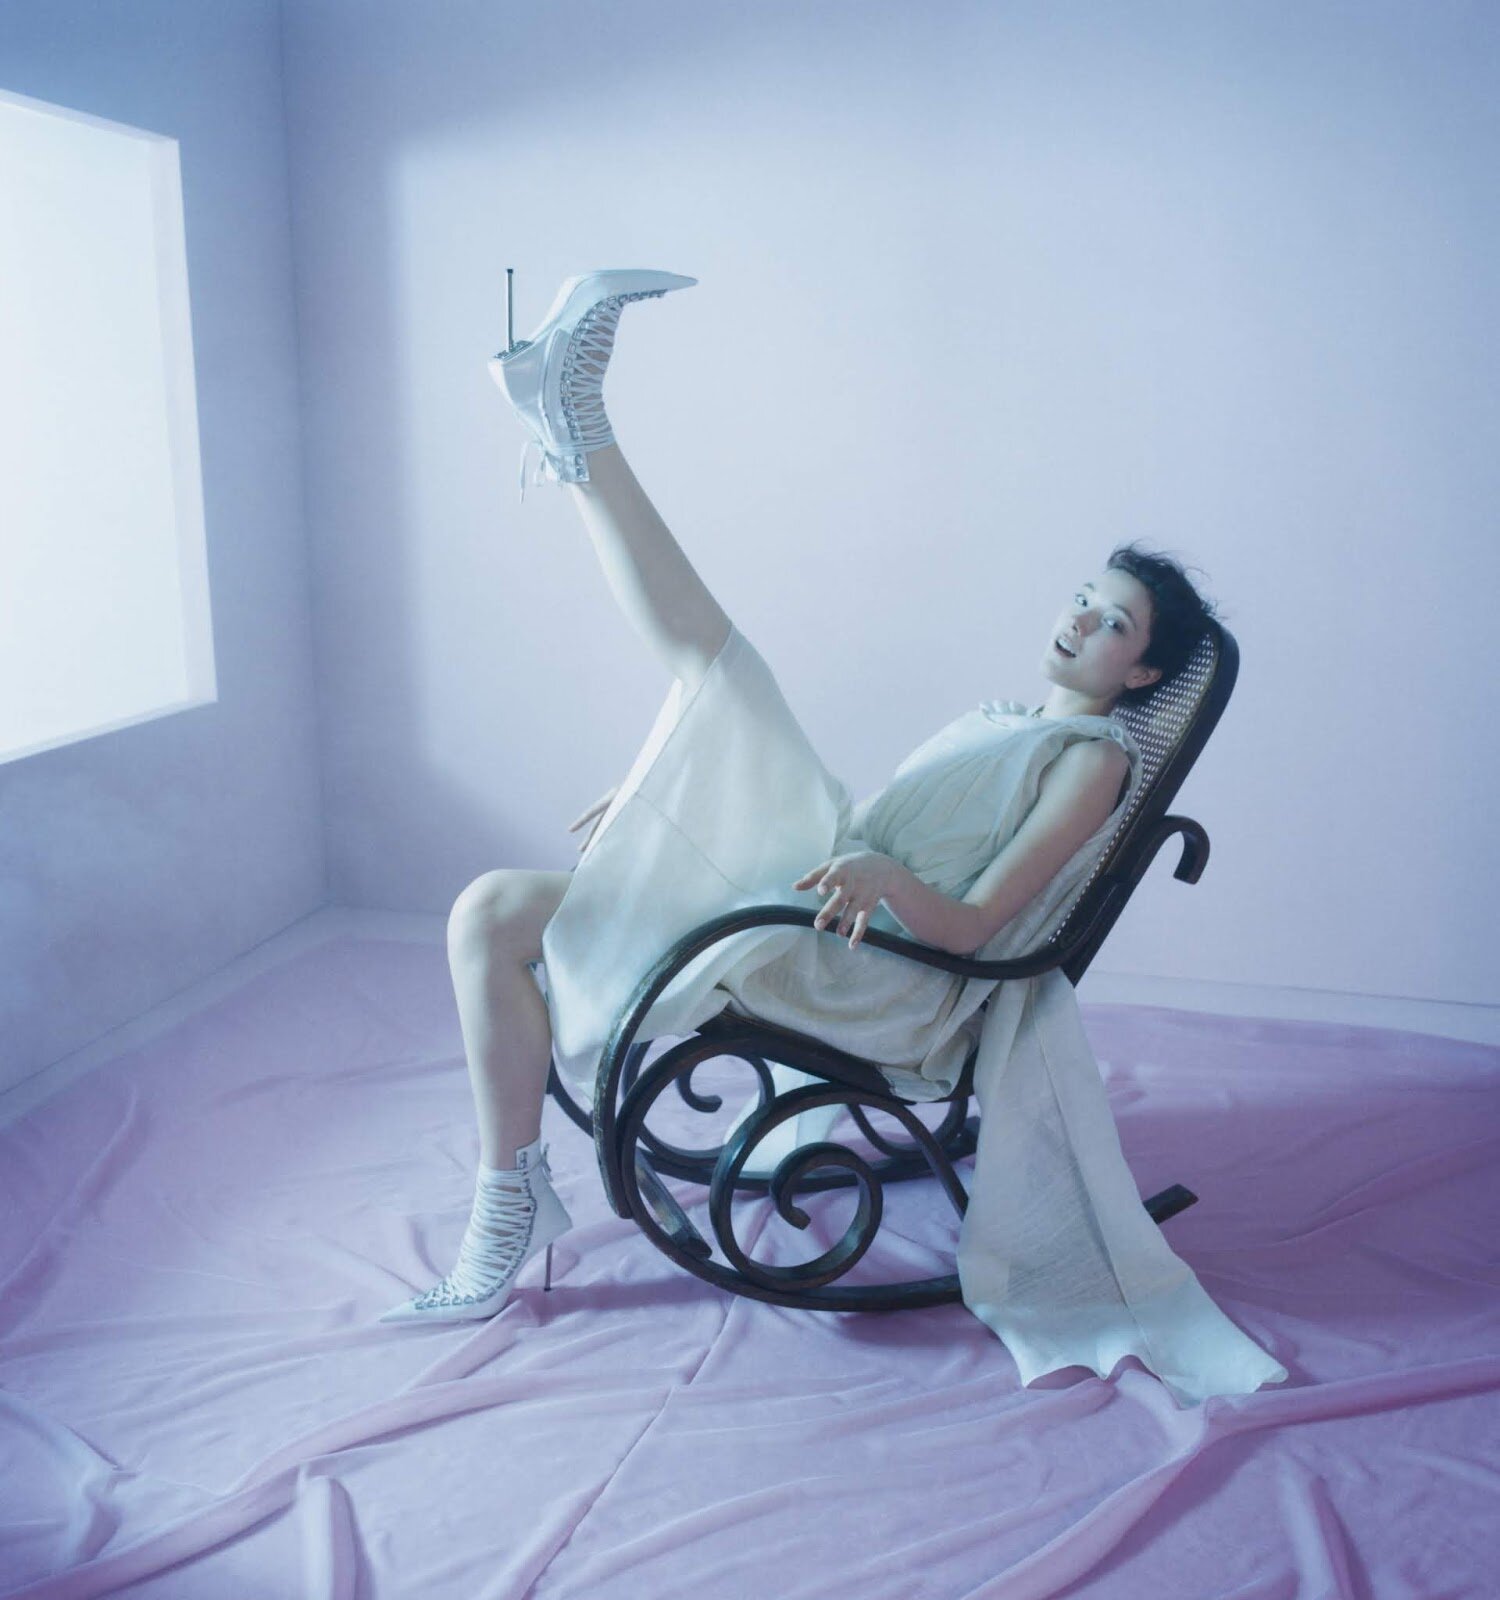 Yumi Lambert by Karen Collins for ELLE UK May 2020 (6).jpg